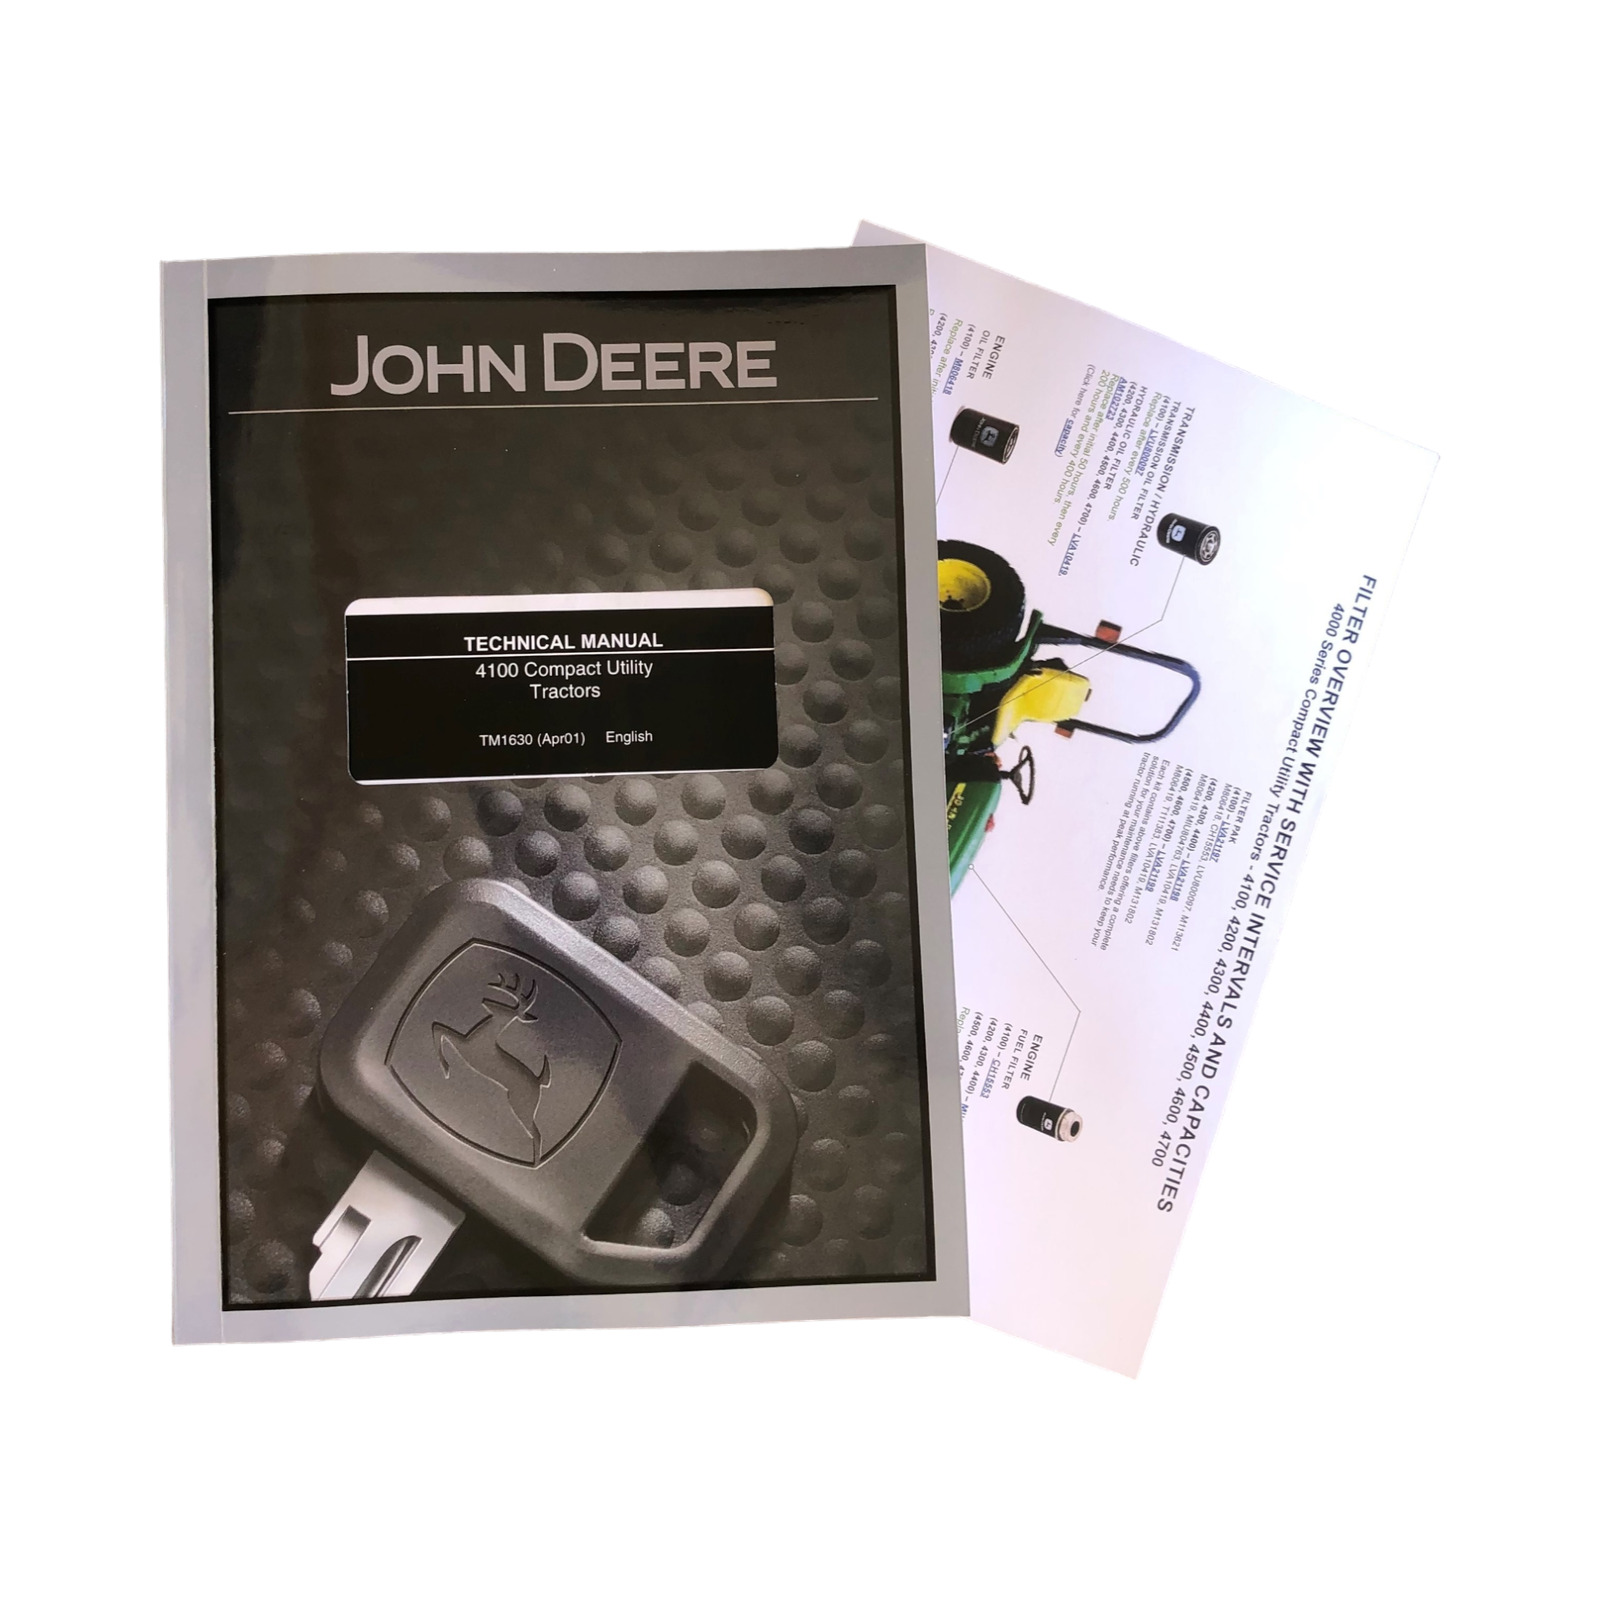 JOHN DEERE 4100 COMPACT UTILITY TRACTOR TECHNICAL MANUAL+ BONUS